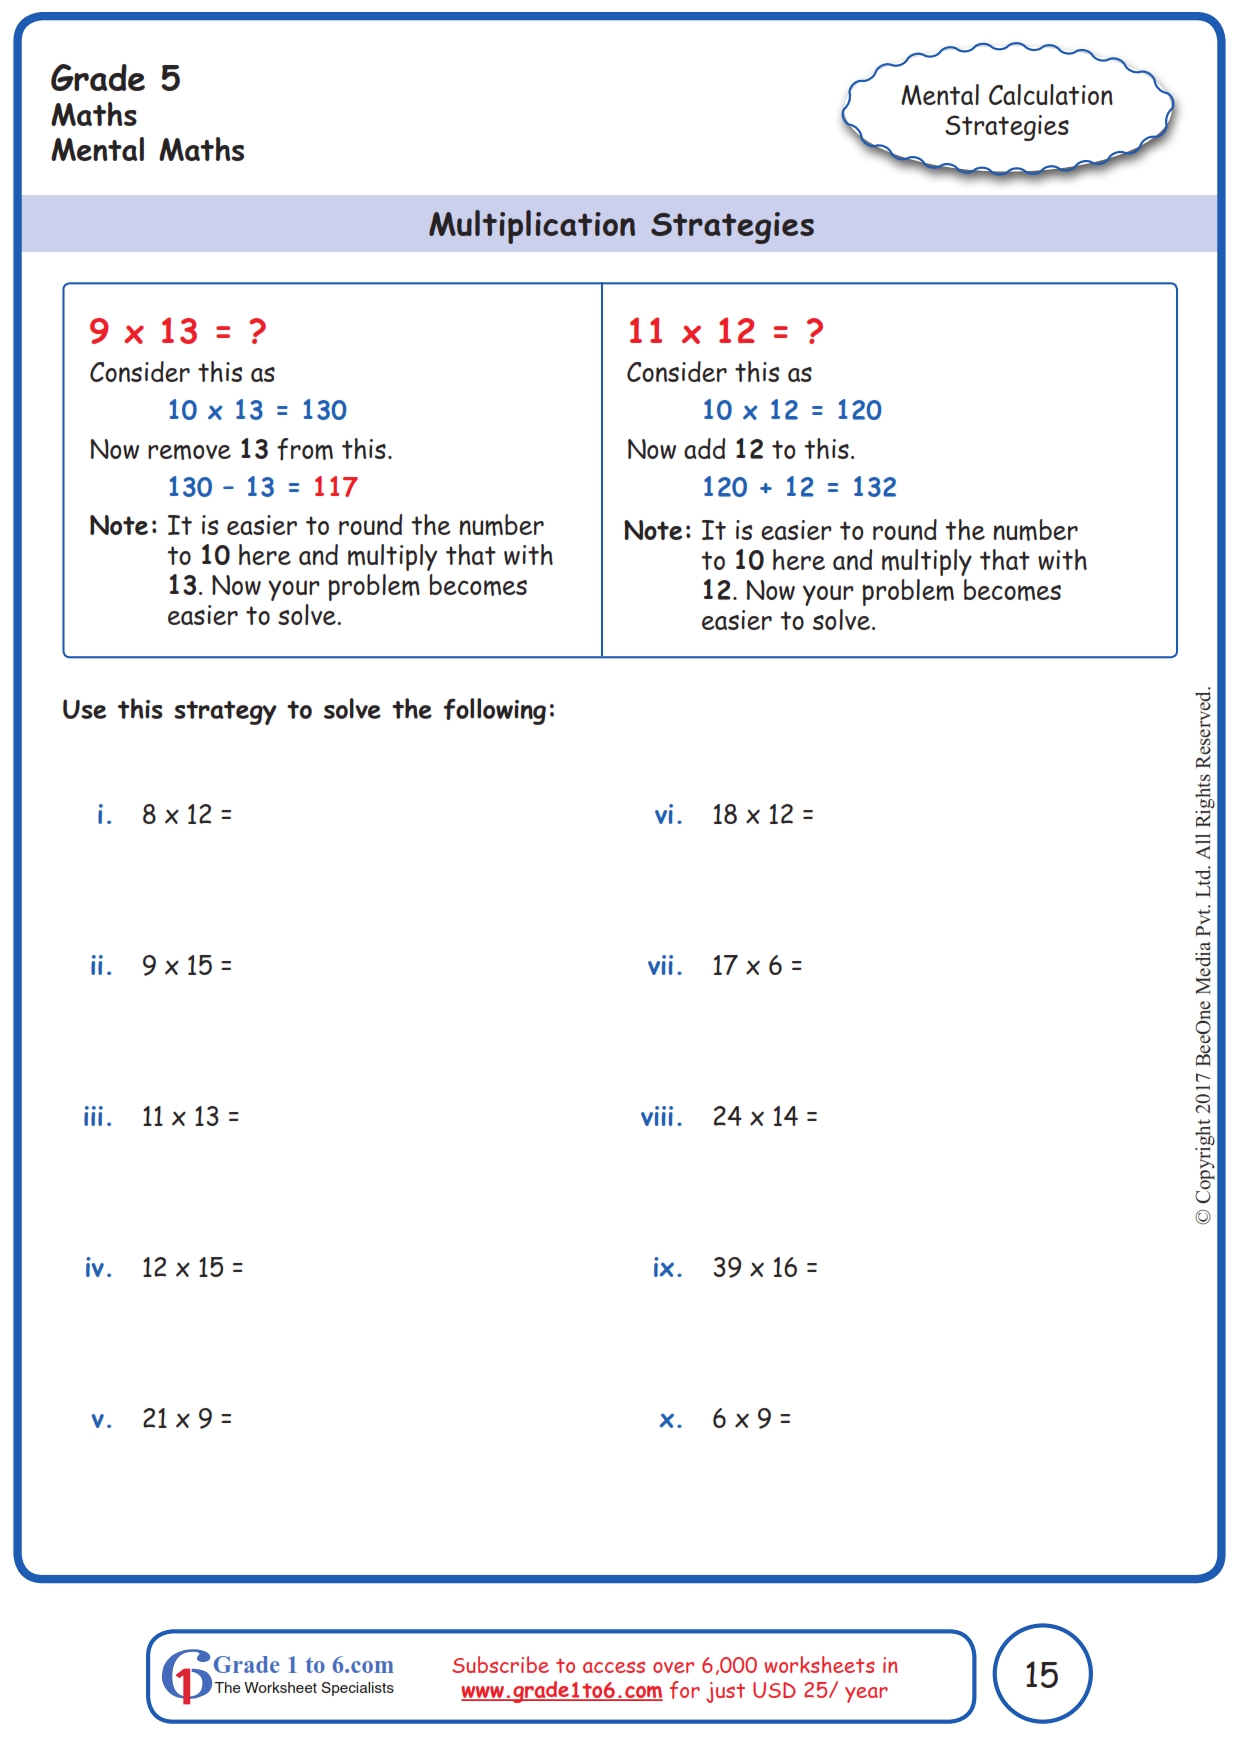 grade-5-multiplication-strategies-worksheets-www-grade1to6